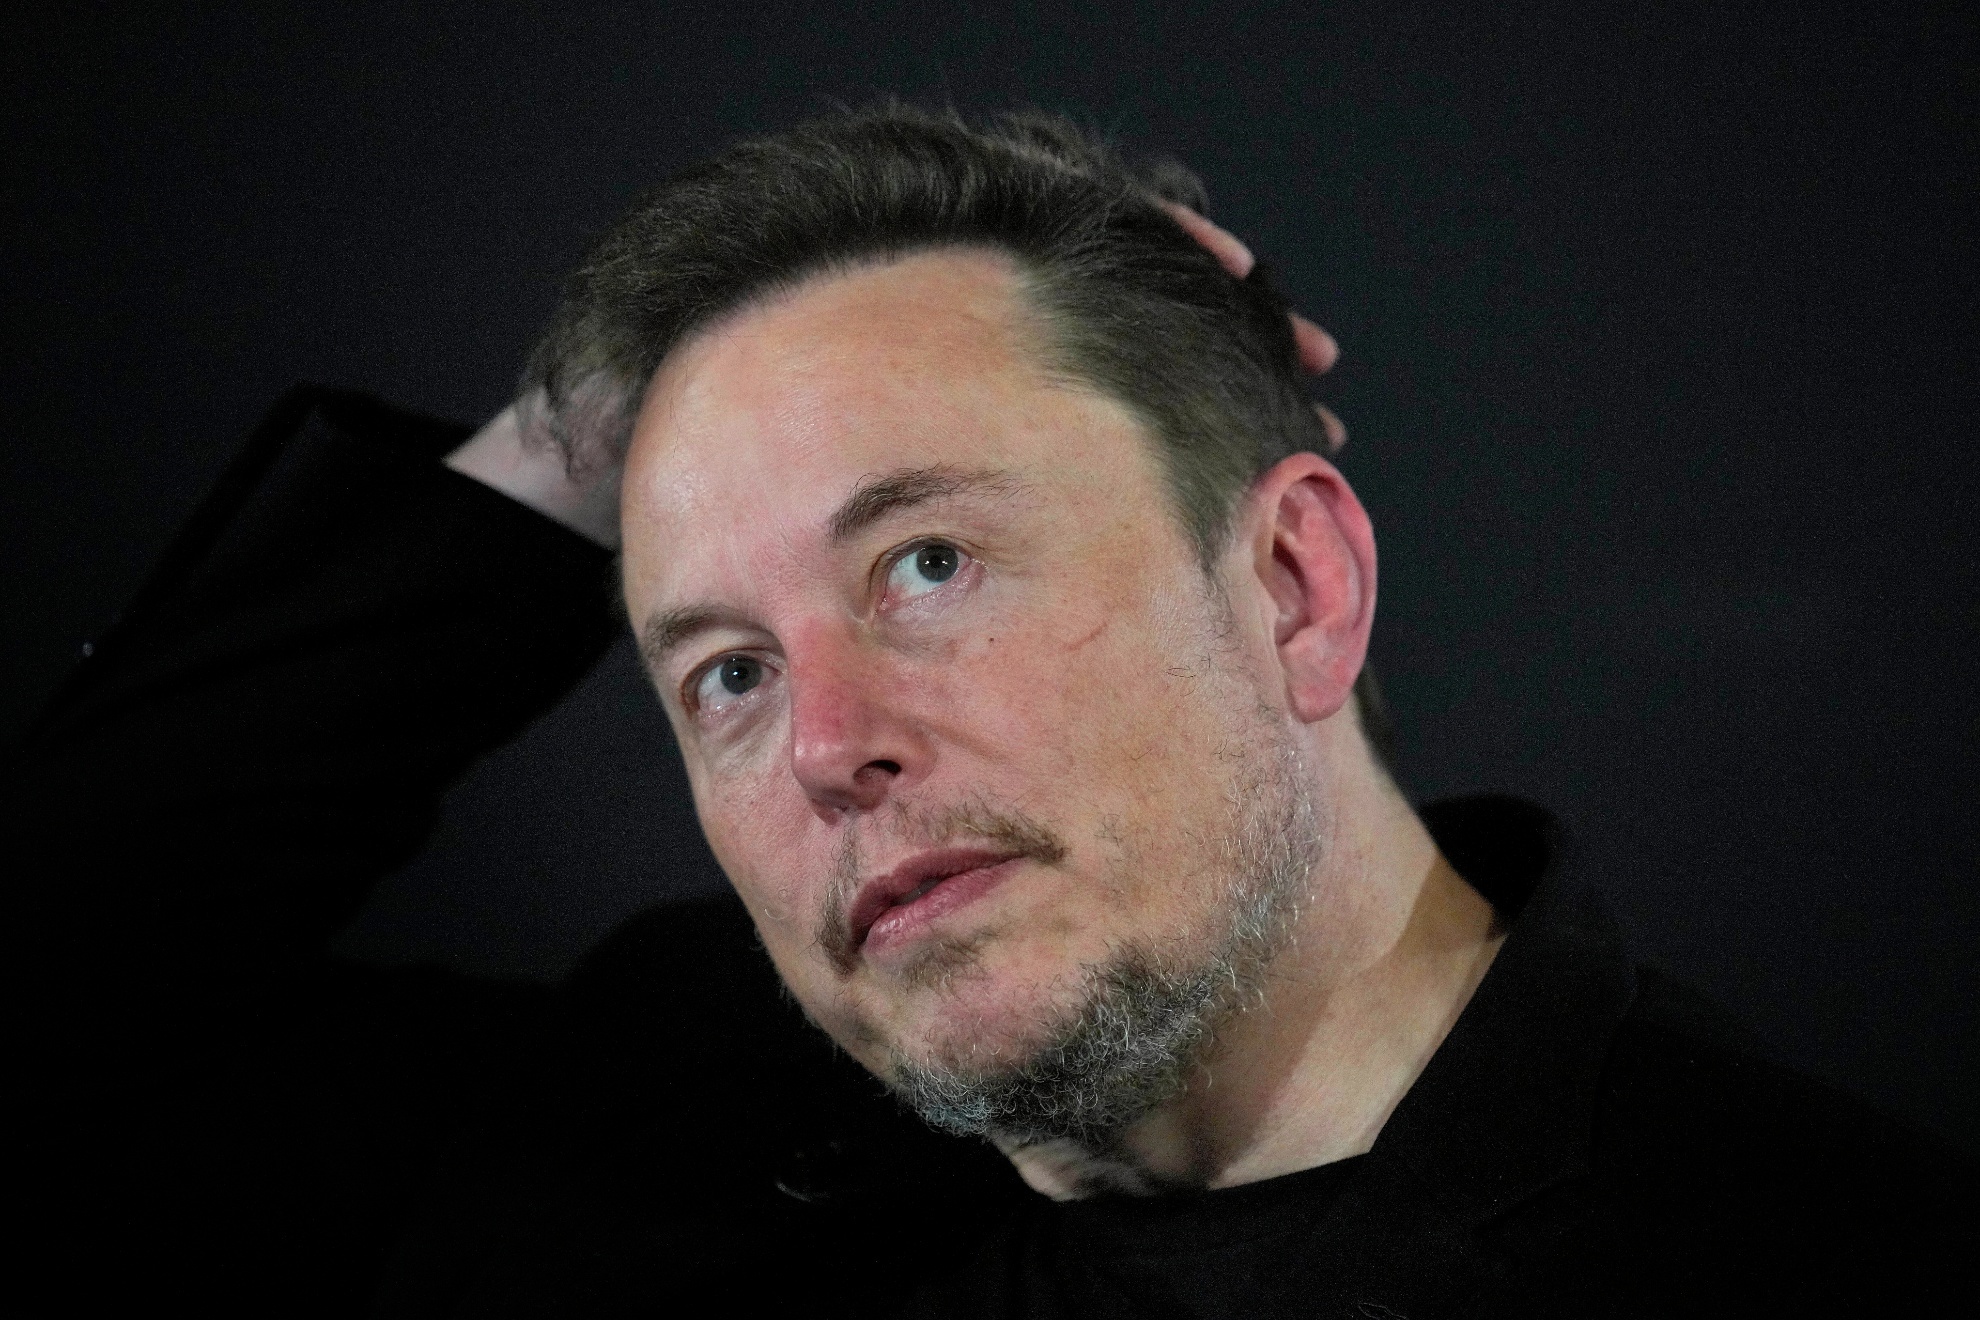 Elon Musk during a public event